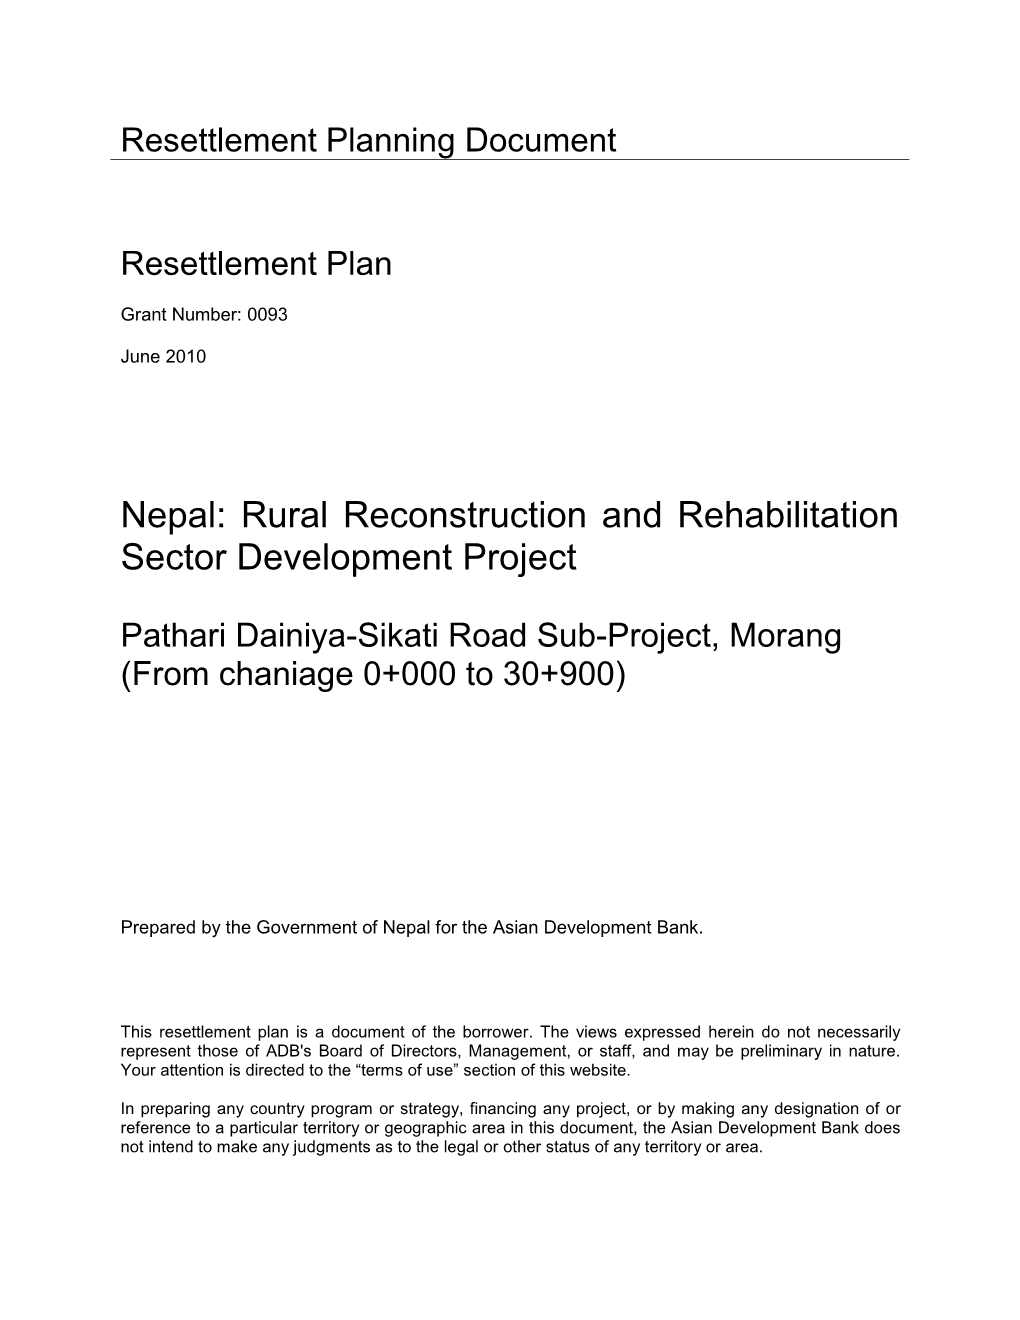 40554-022: Pathari Dainiya-Sikati Road Sub-Project Resettlement Plan